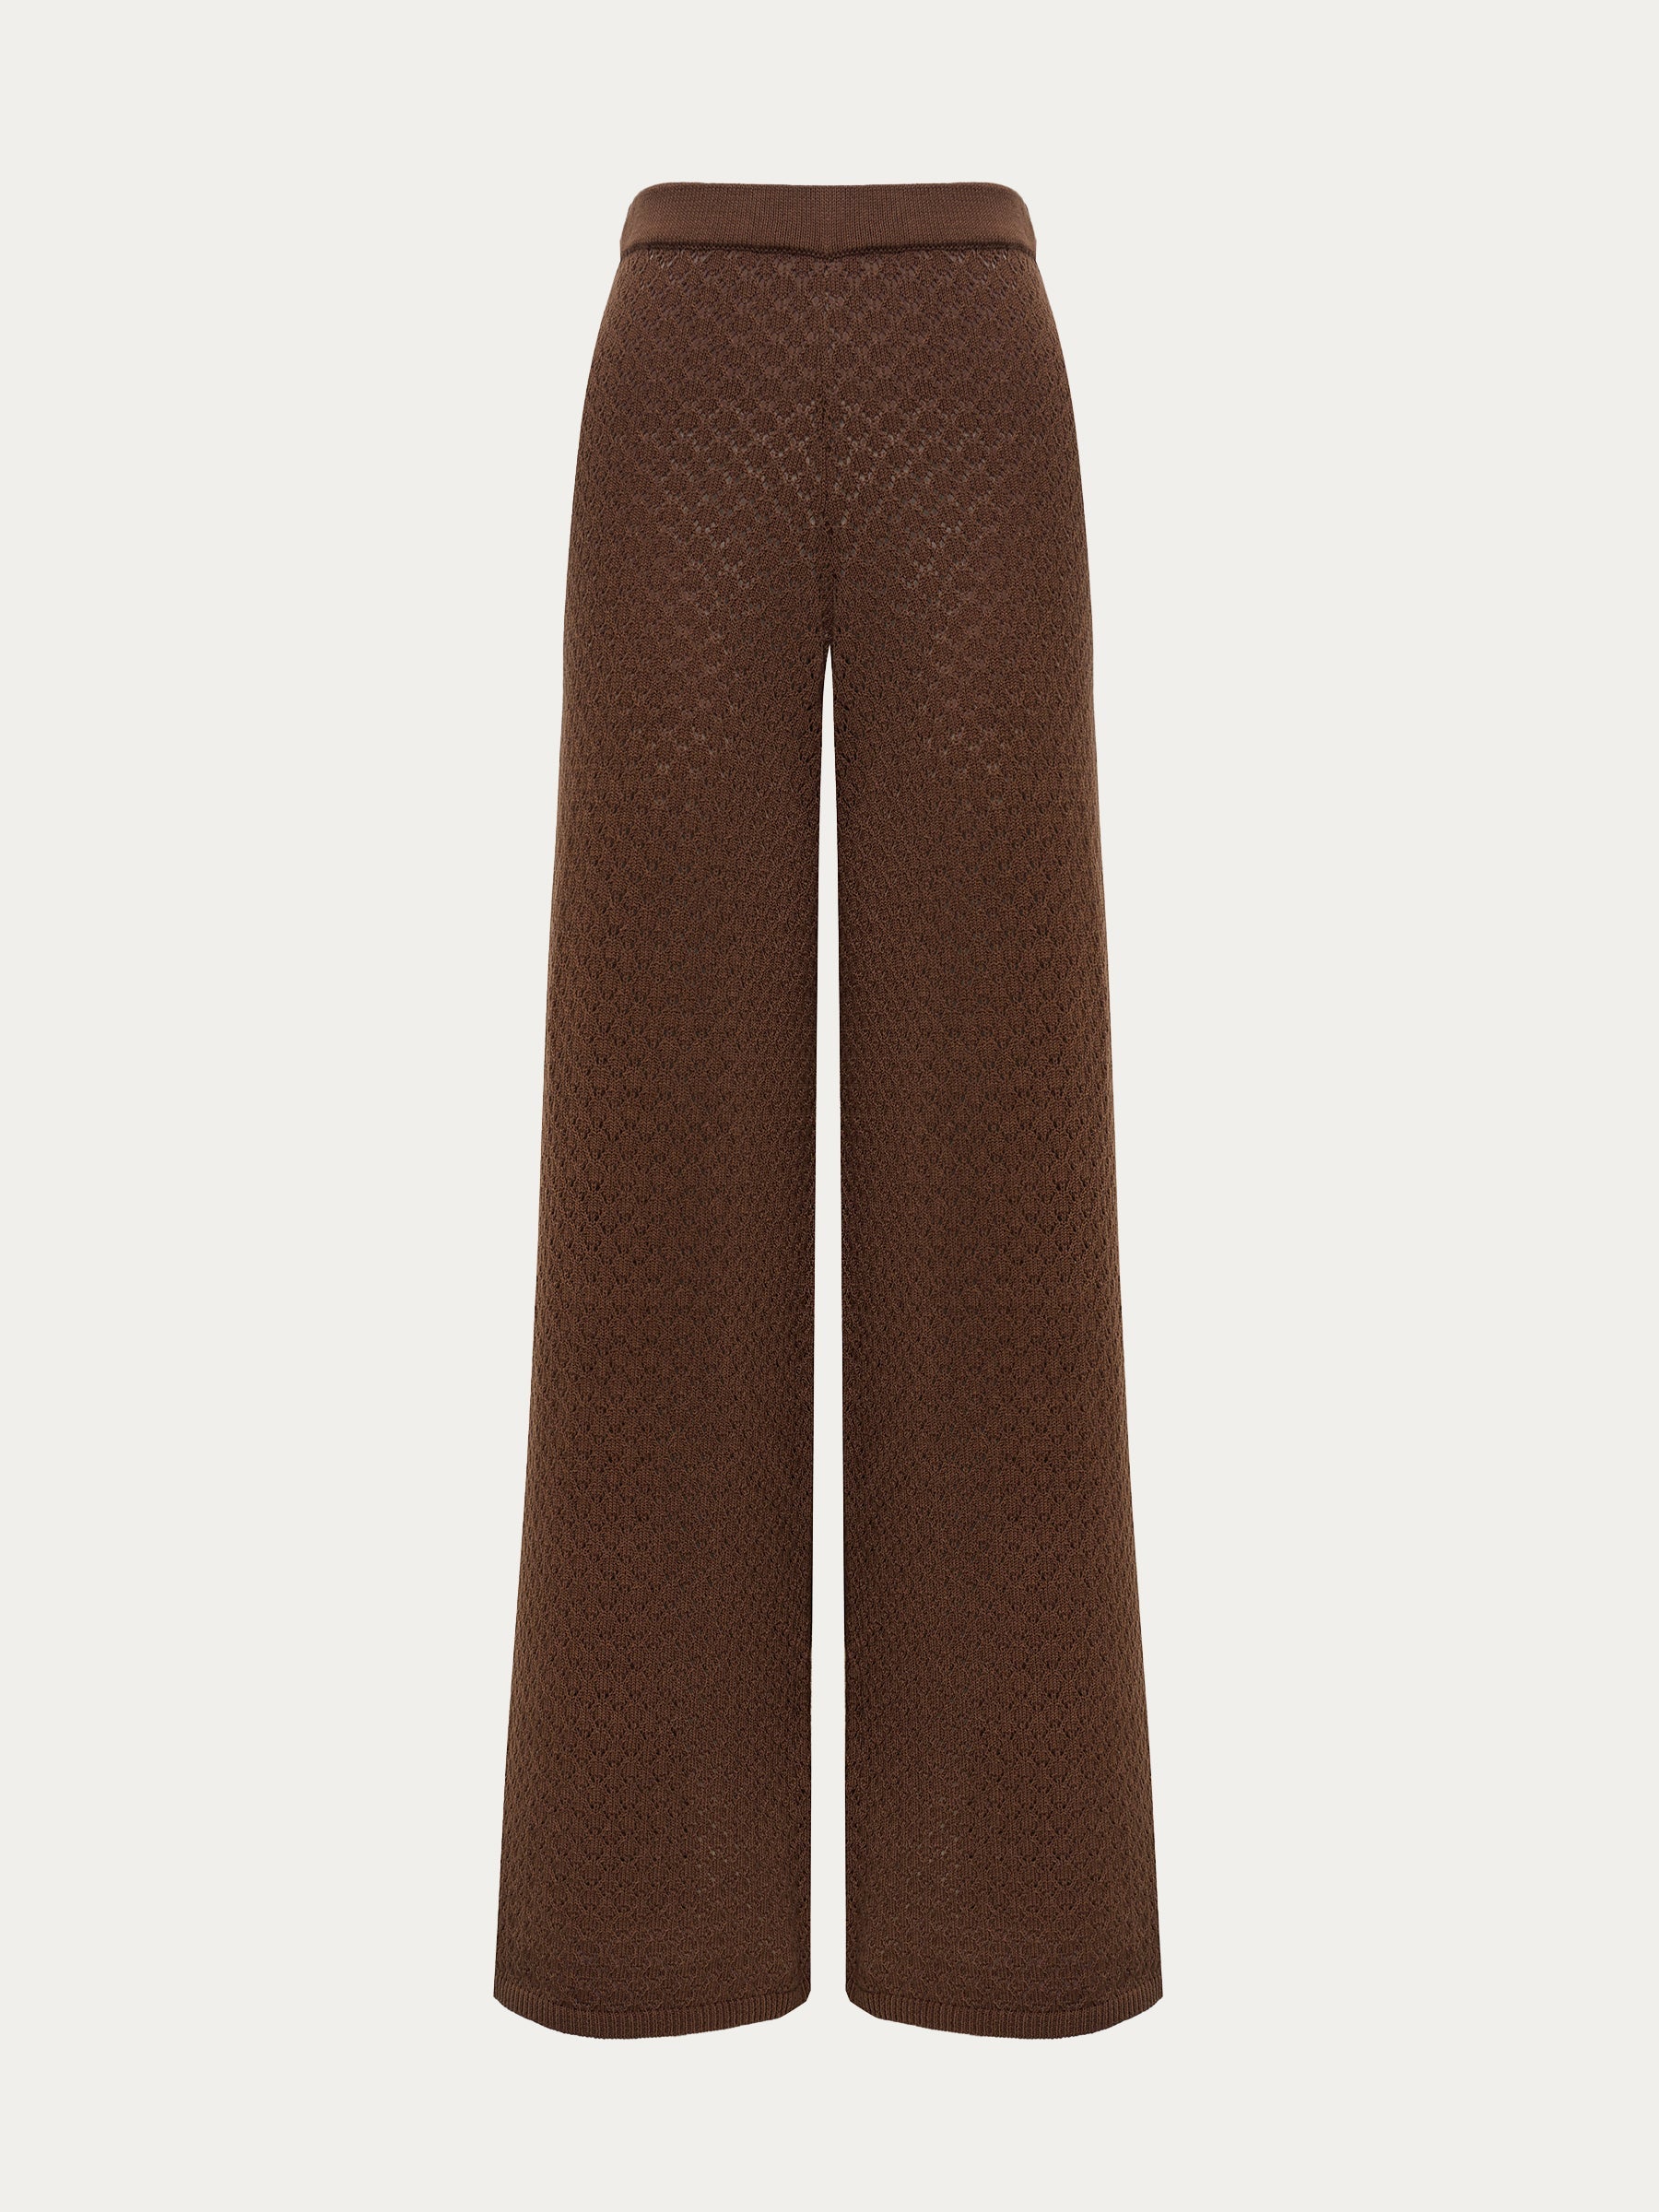 Cotton knit trousers